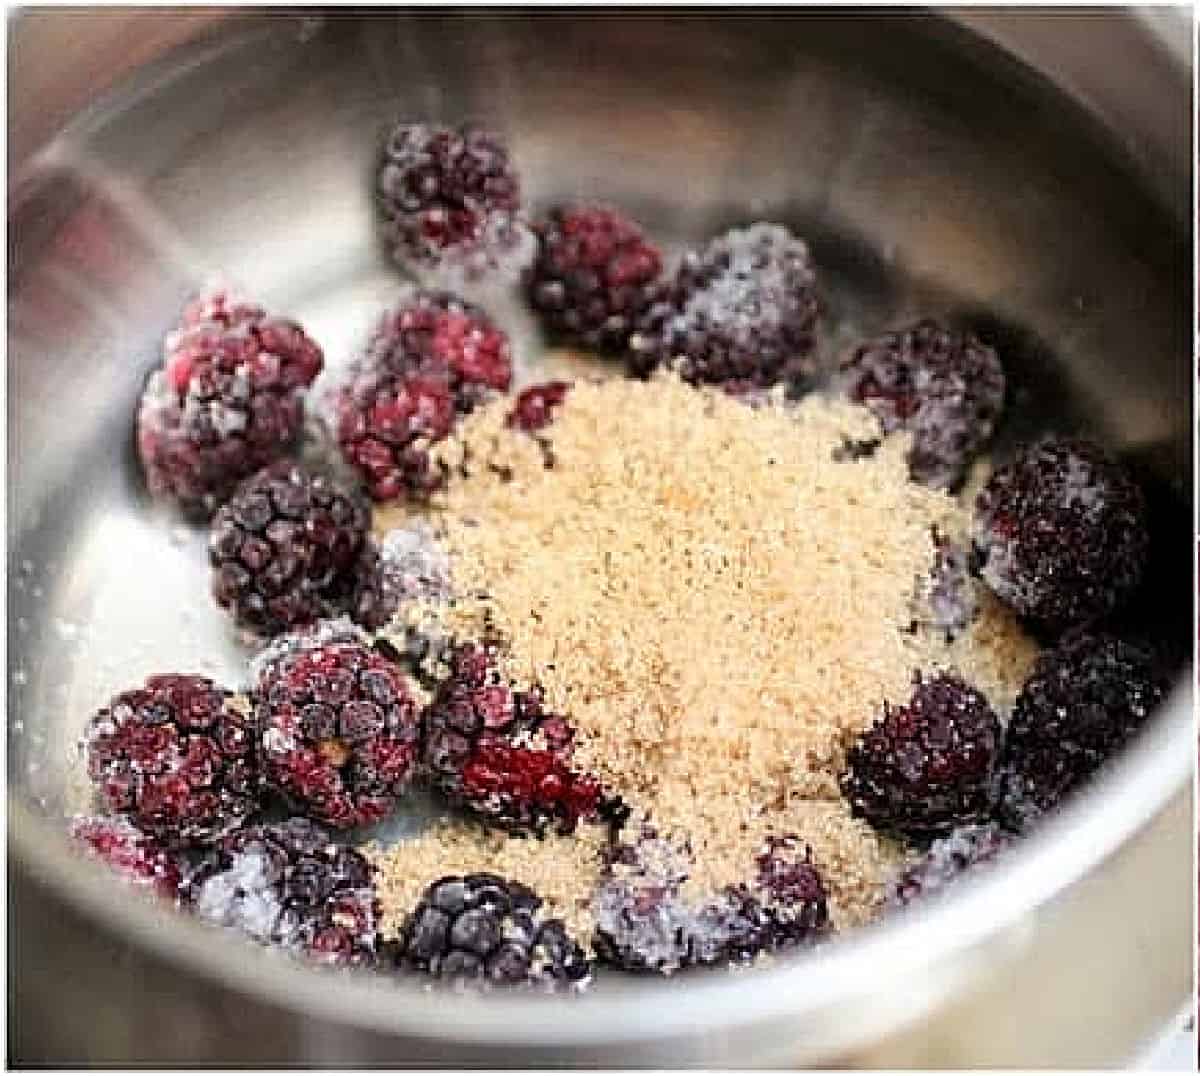 Metal saucepan with blackberries and brown sugar